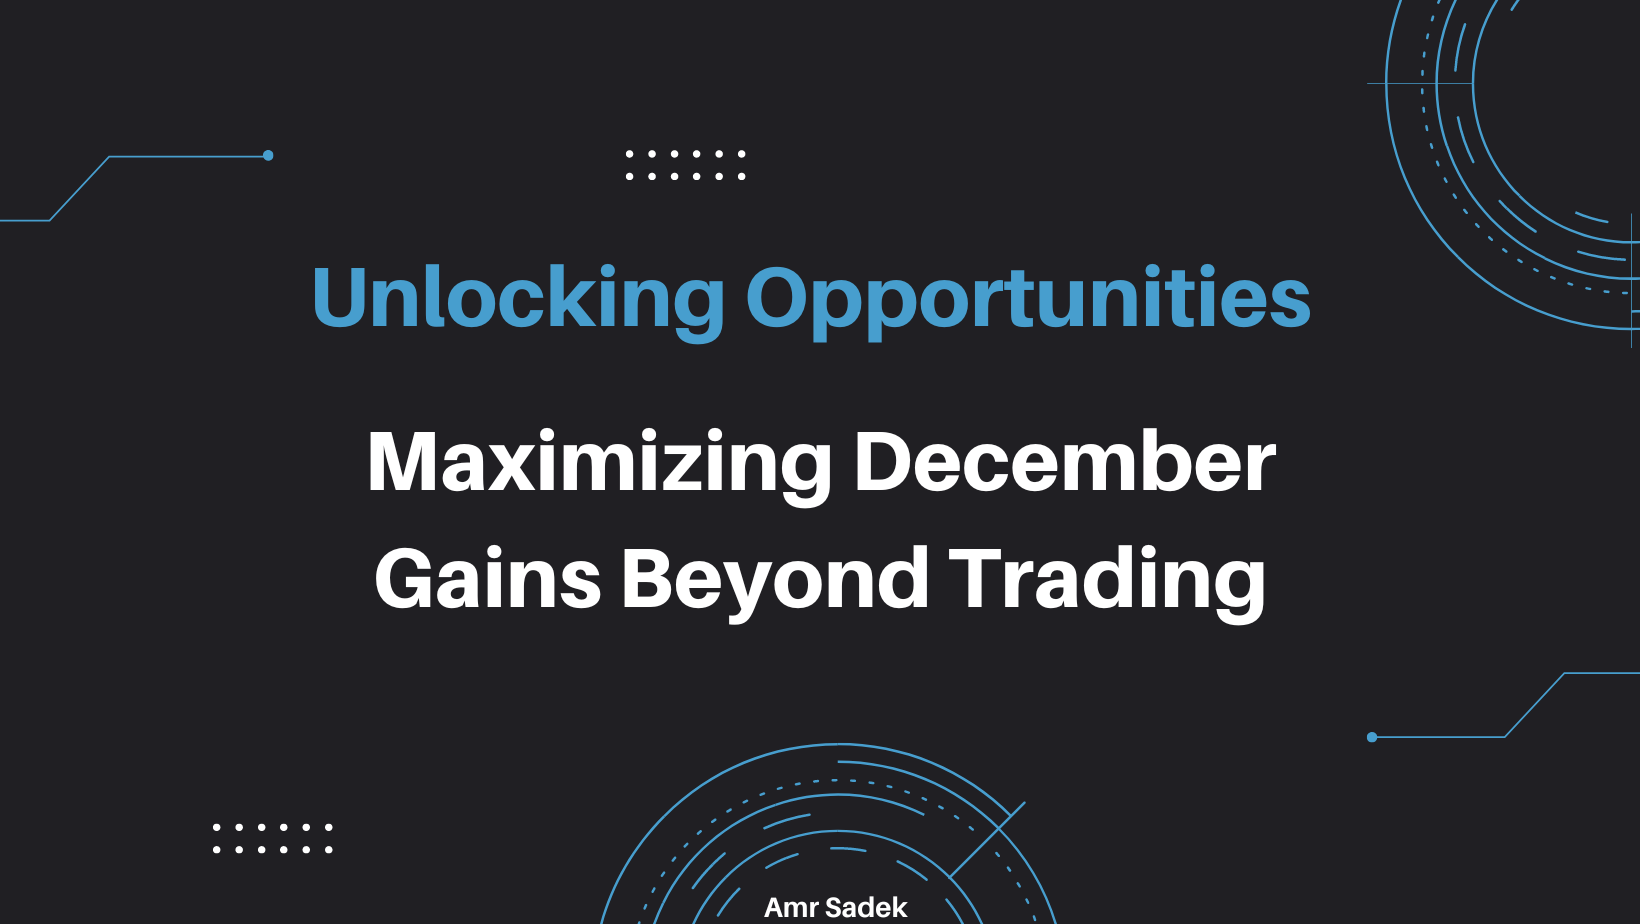 Unlocking Opportunities: Maximizing Dec. Gains Beyond Trading